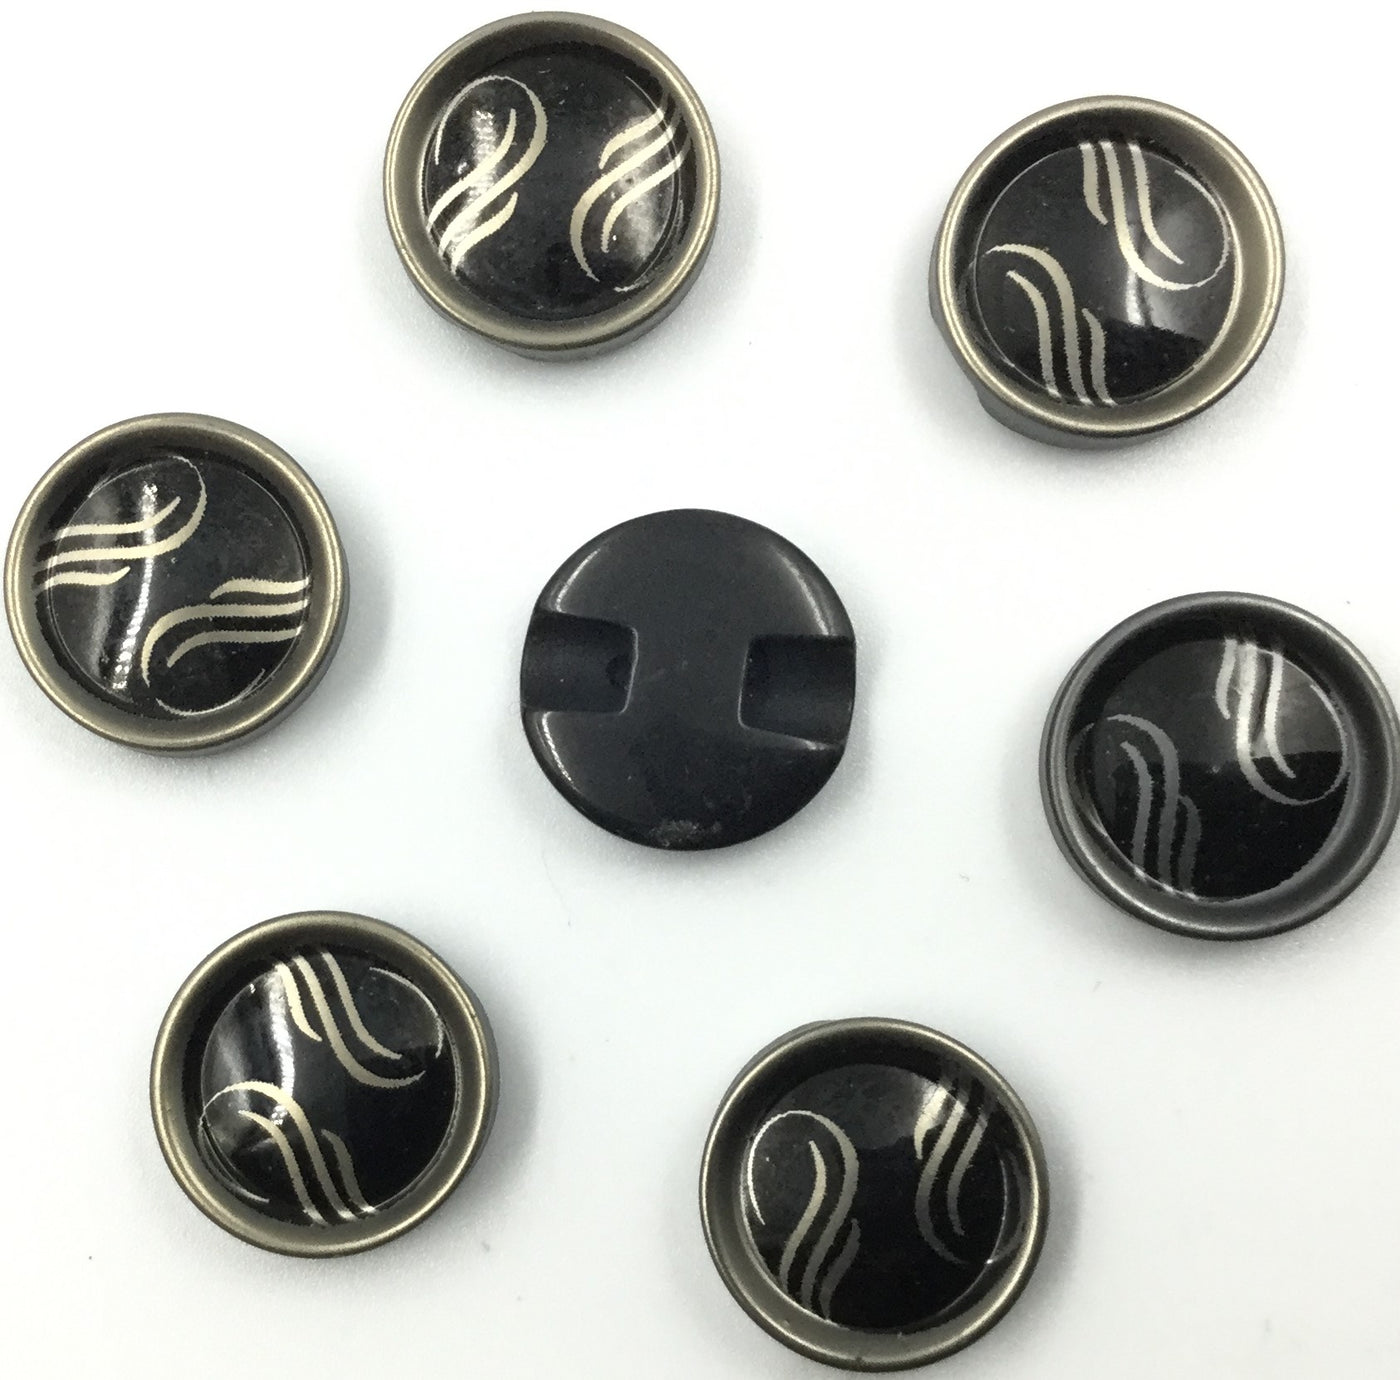 Black & Golden Circular Plastic Buttons